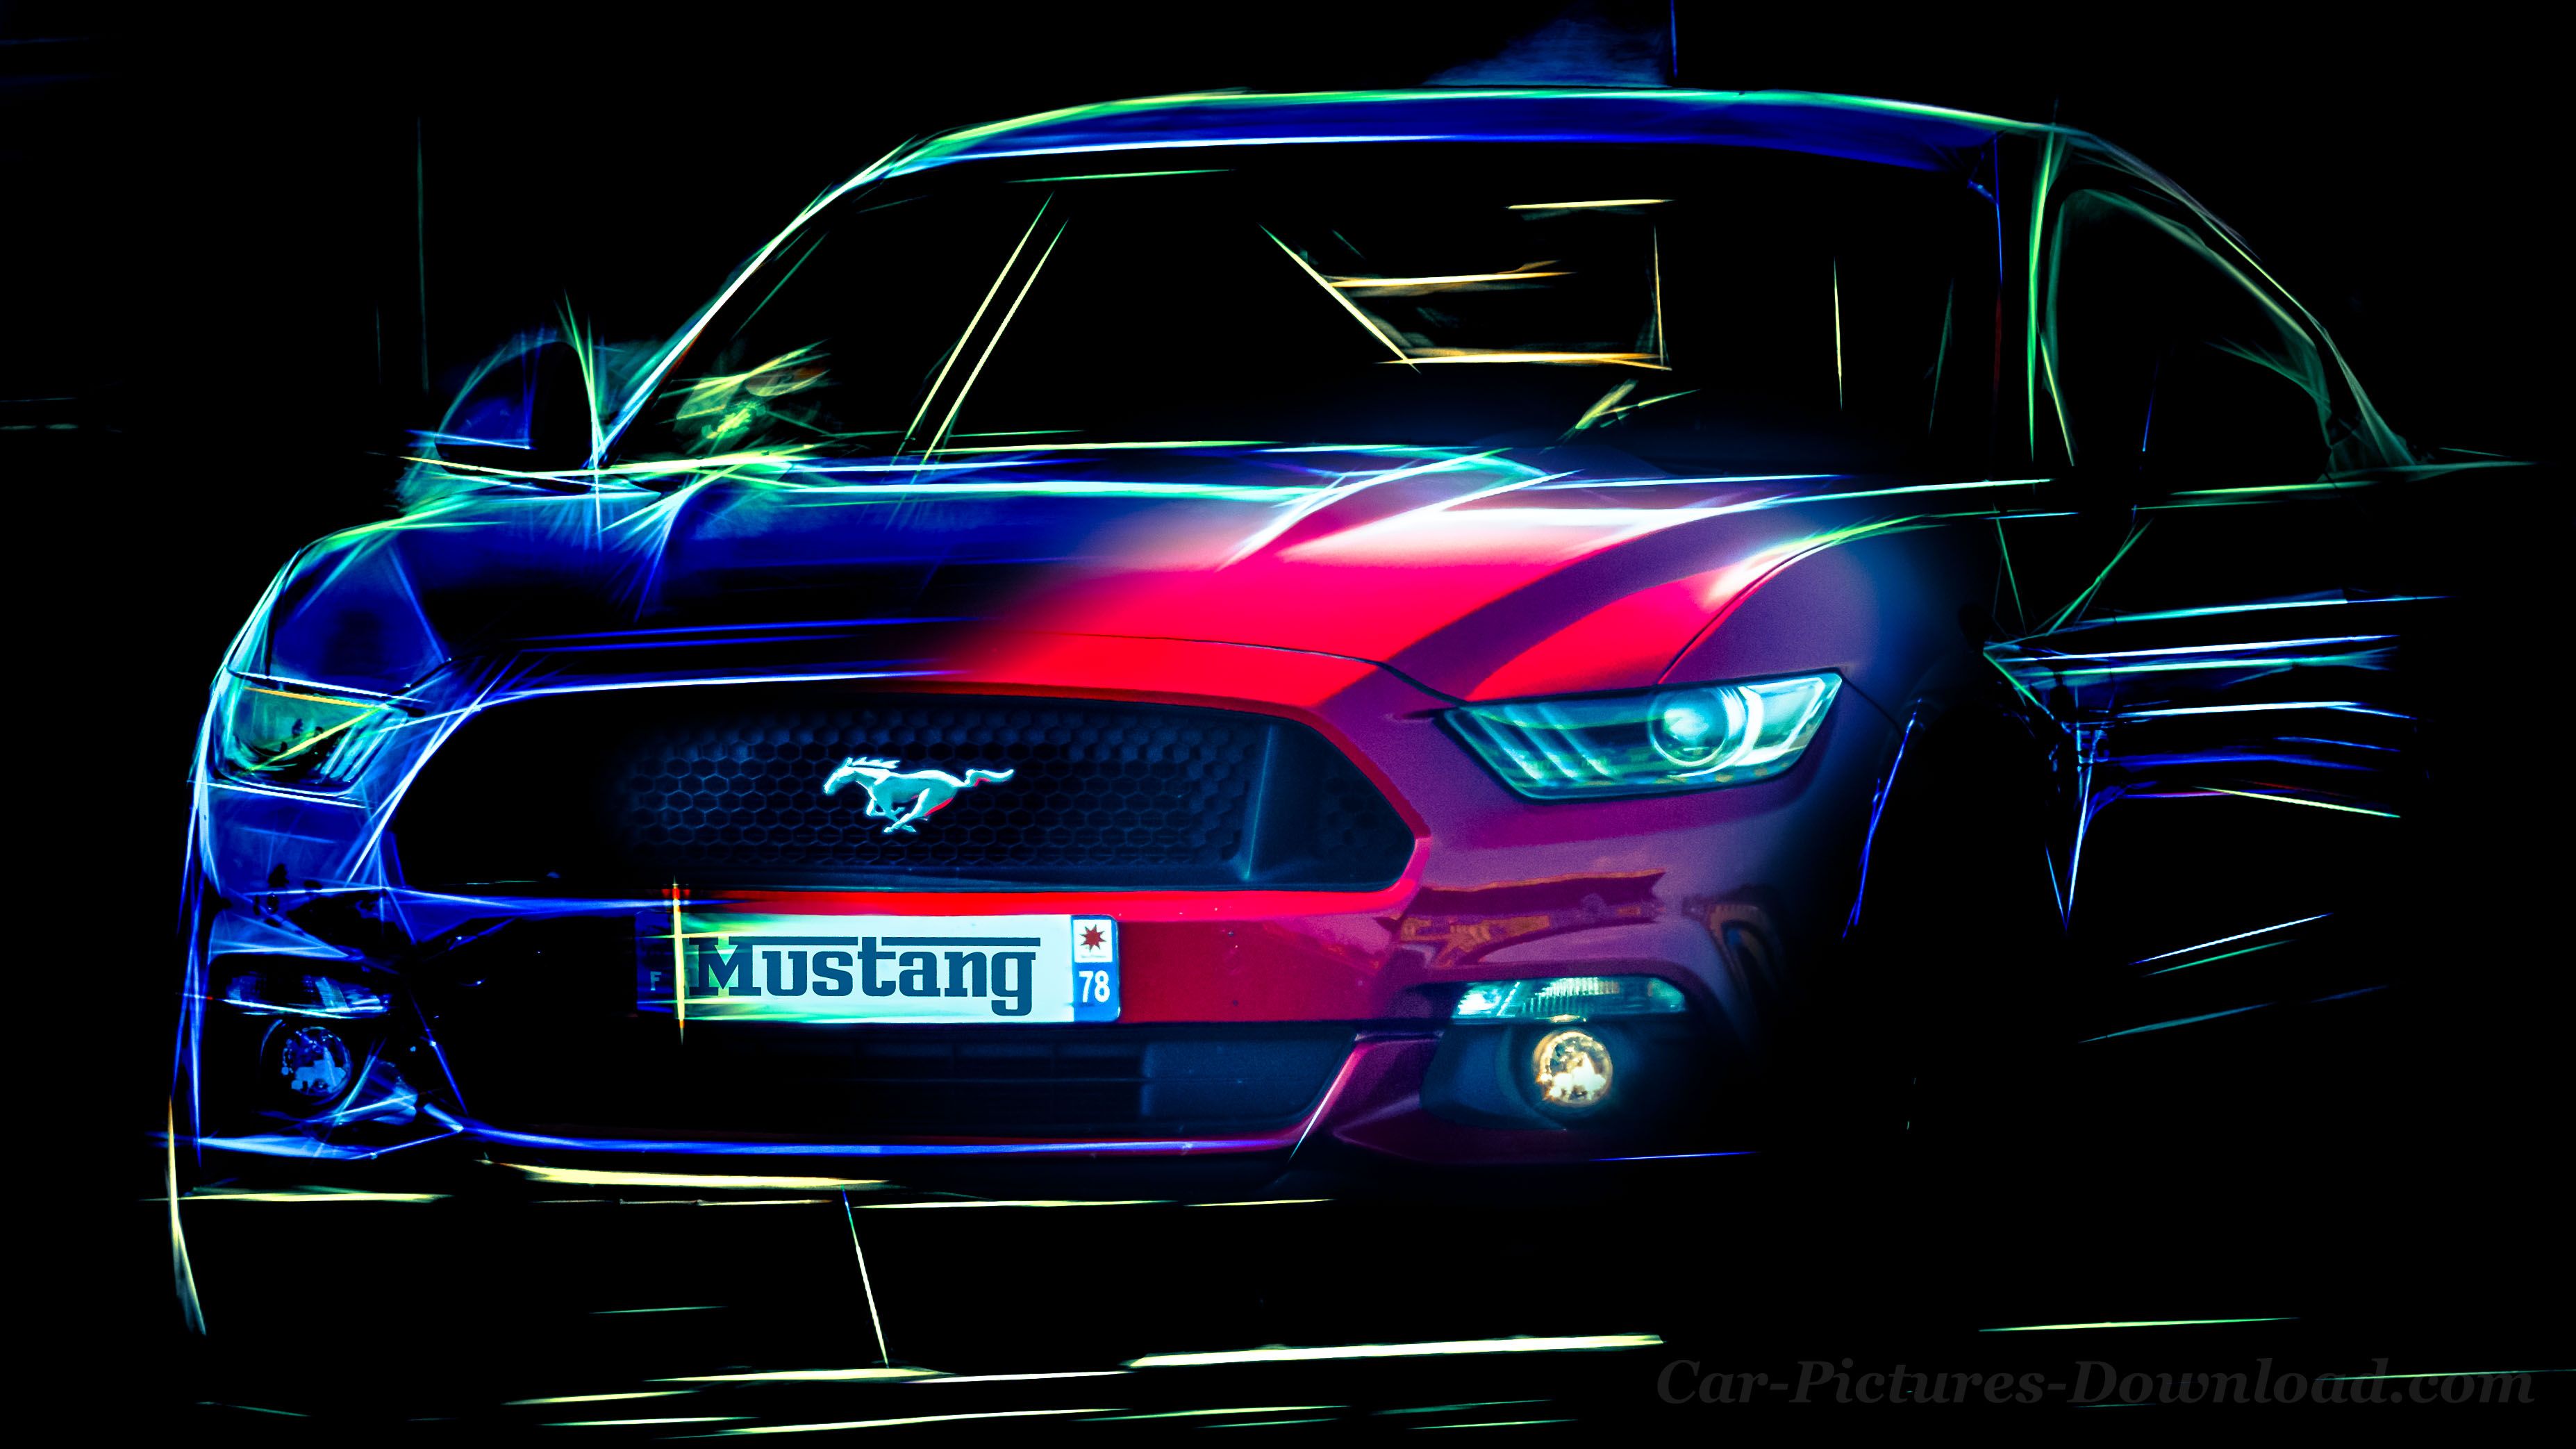 Mustang Wallpapers Image.